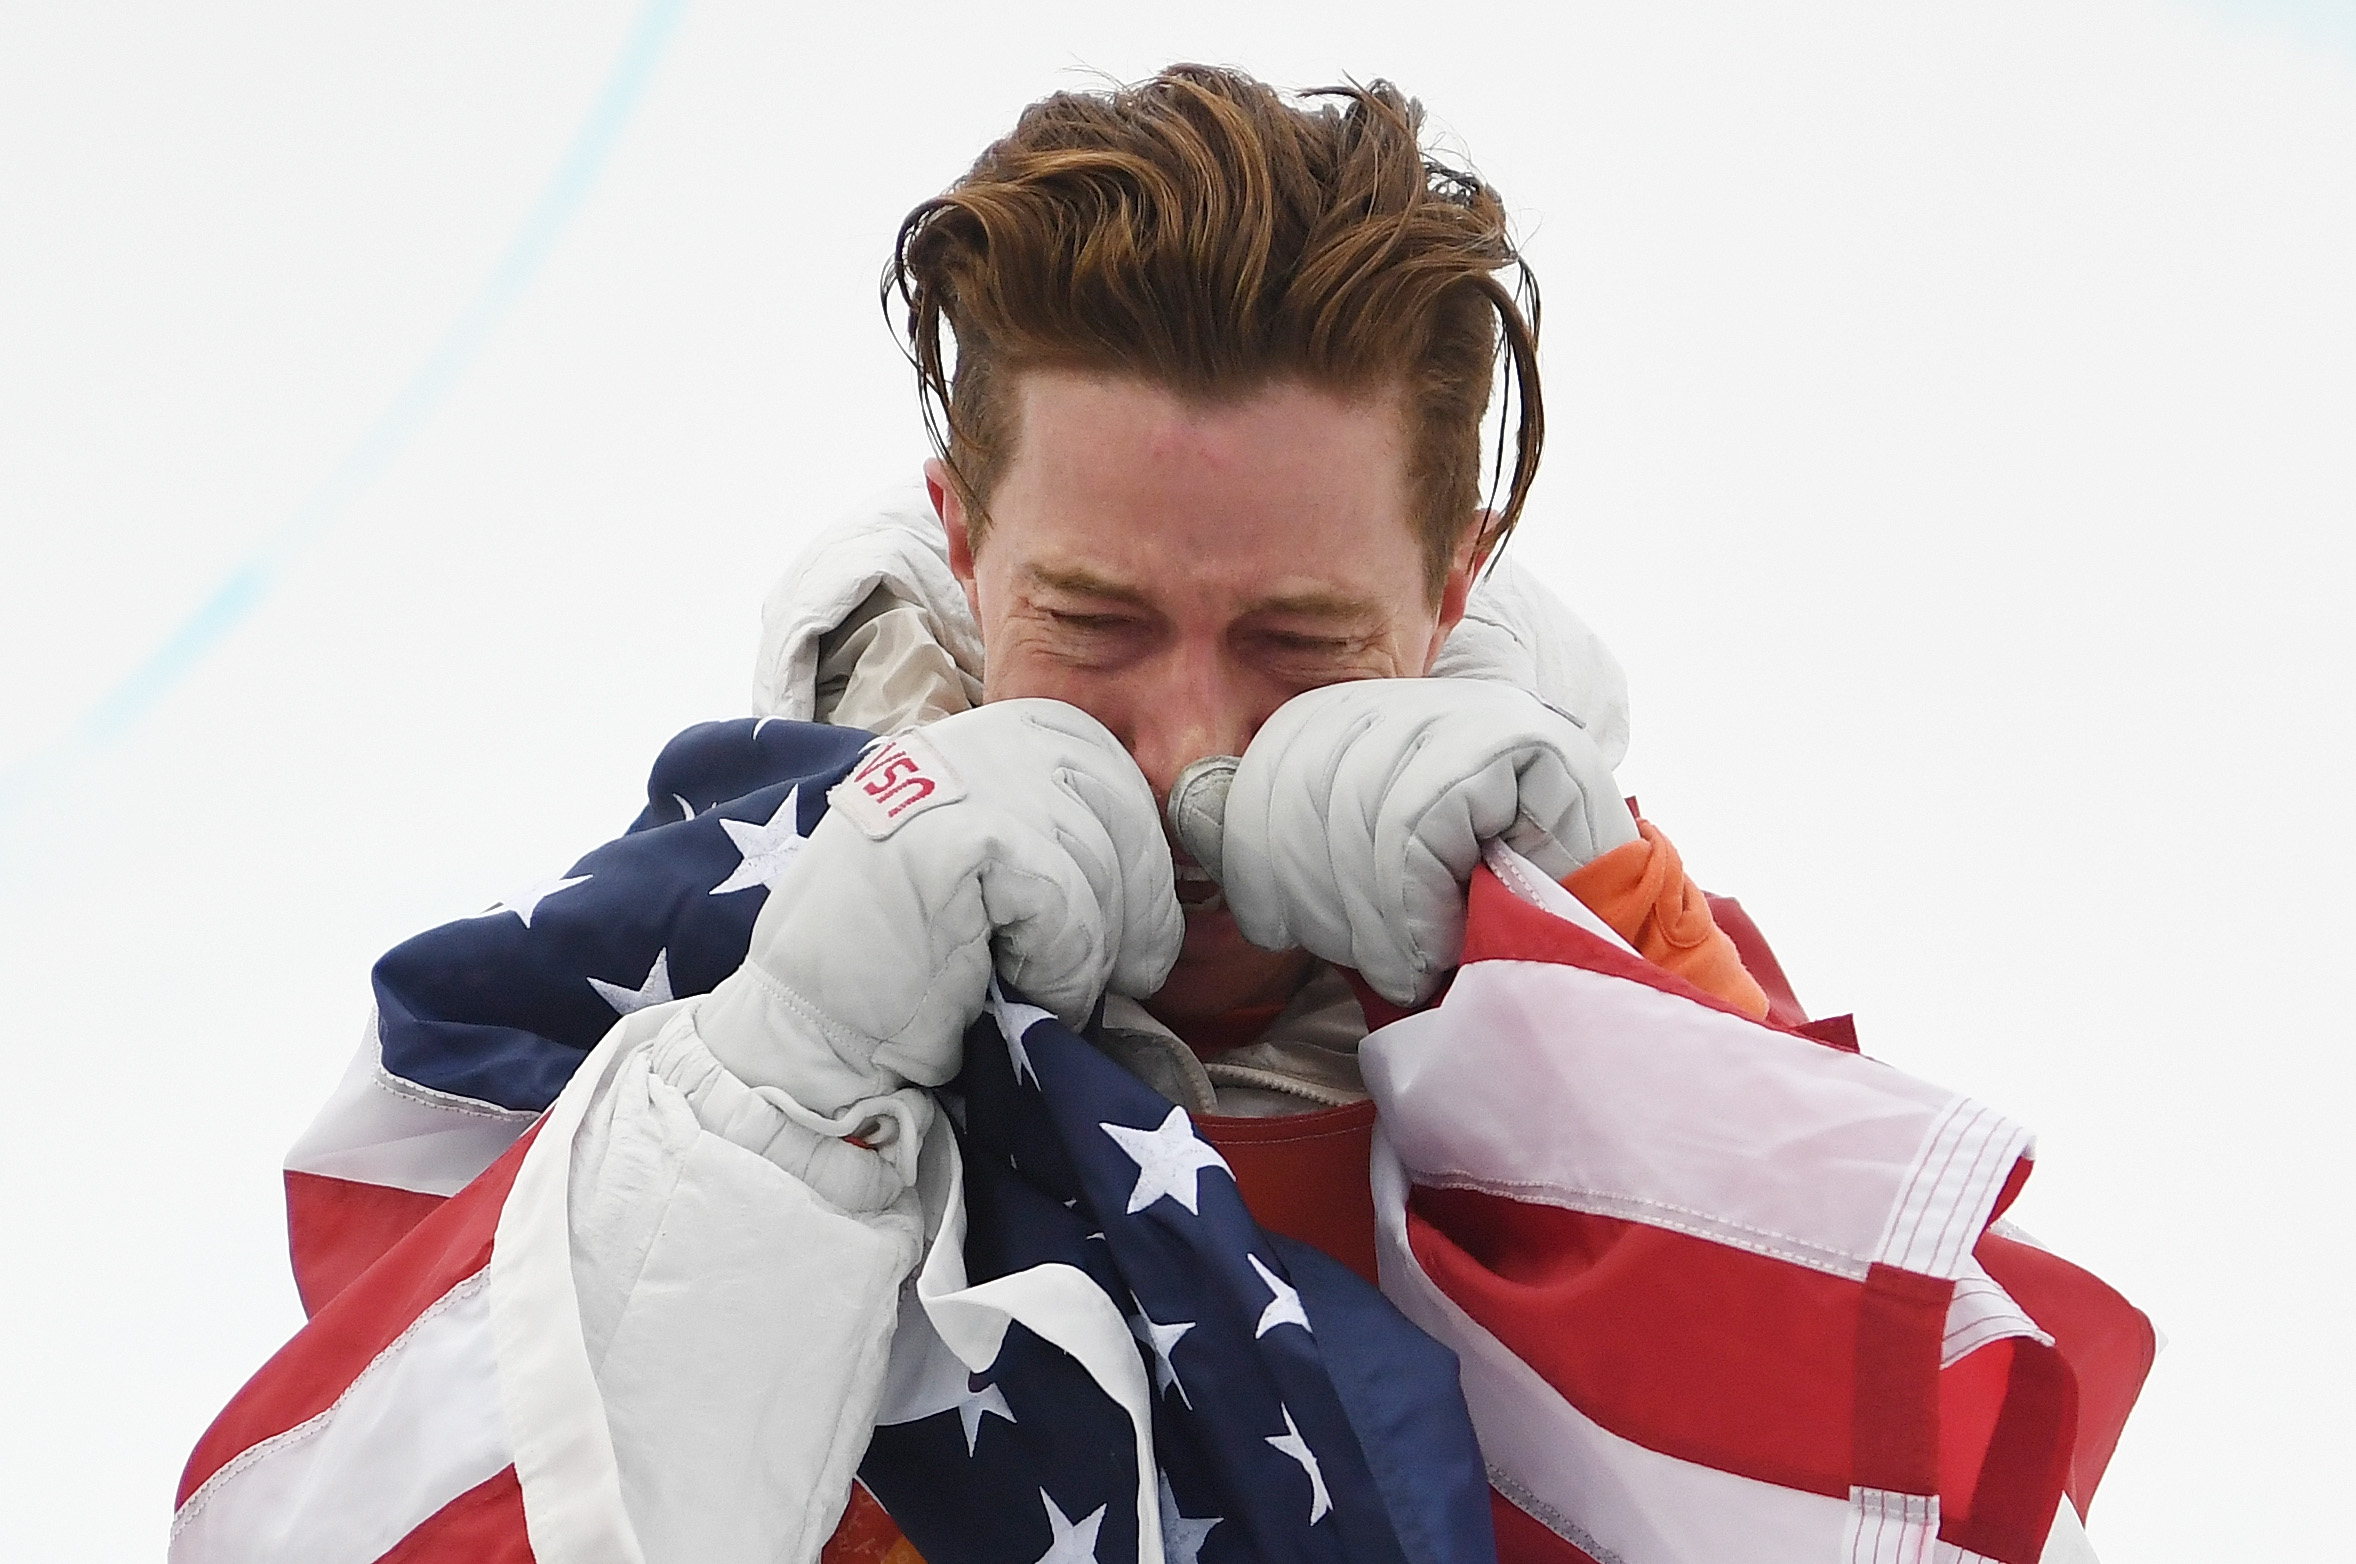 2018 Winter Olympics: Shaun White gets massive score, tops